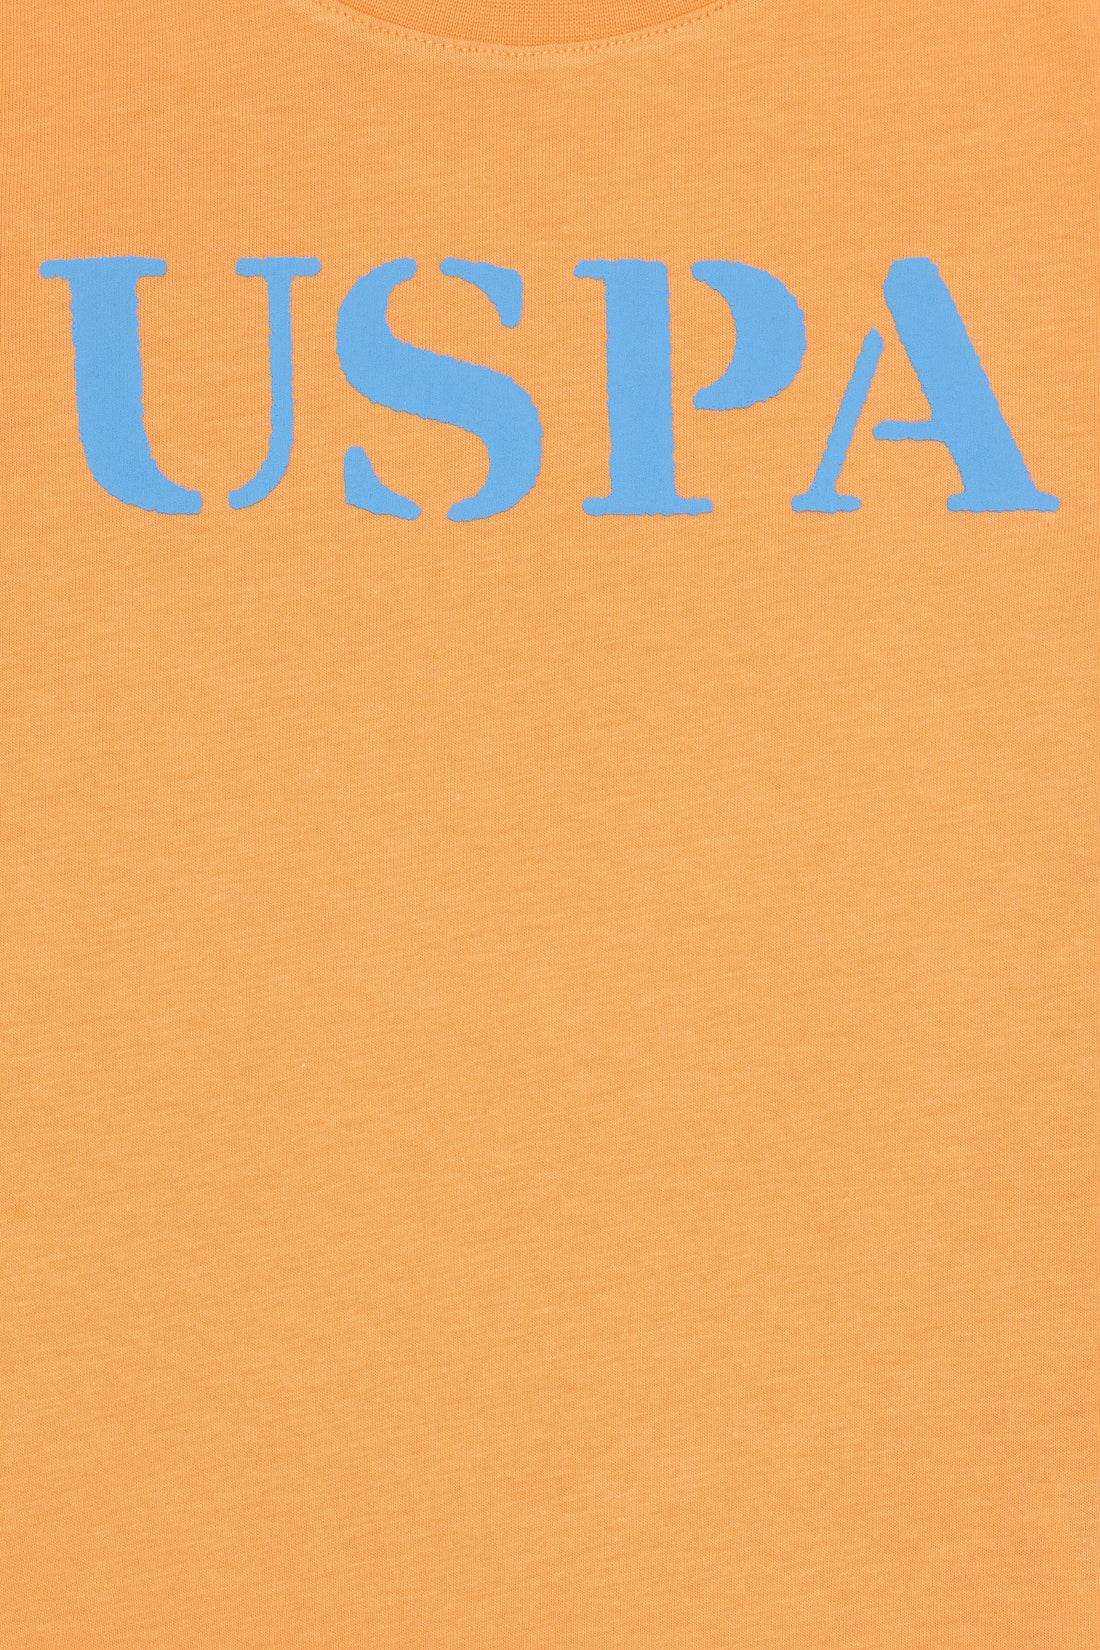 Orange Short Sleeve T-Shirt With Graphics